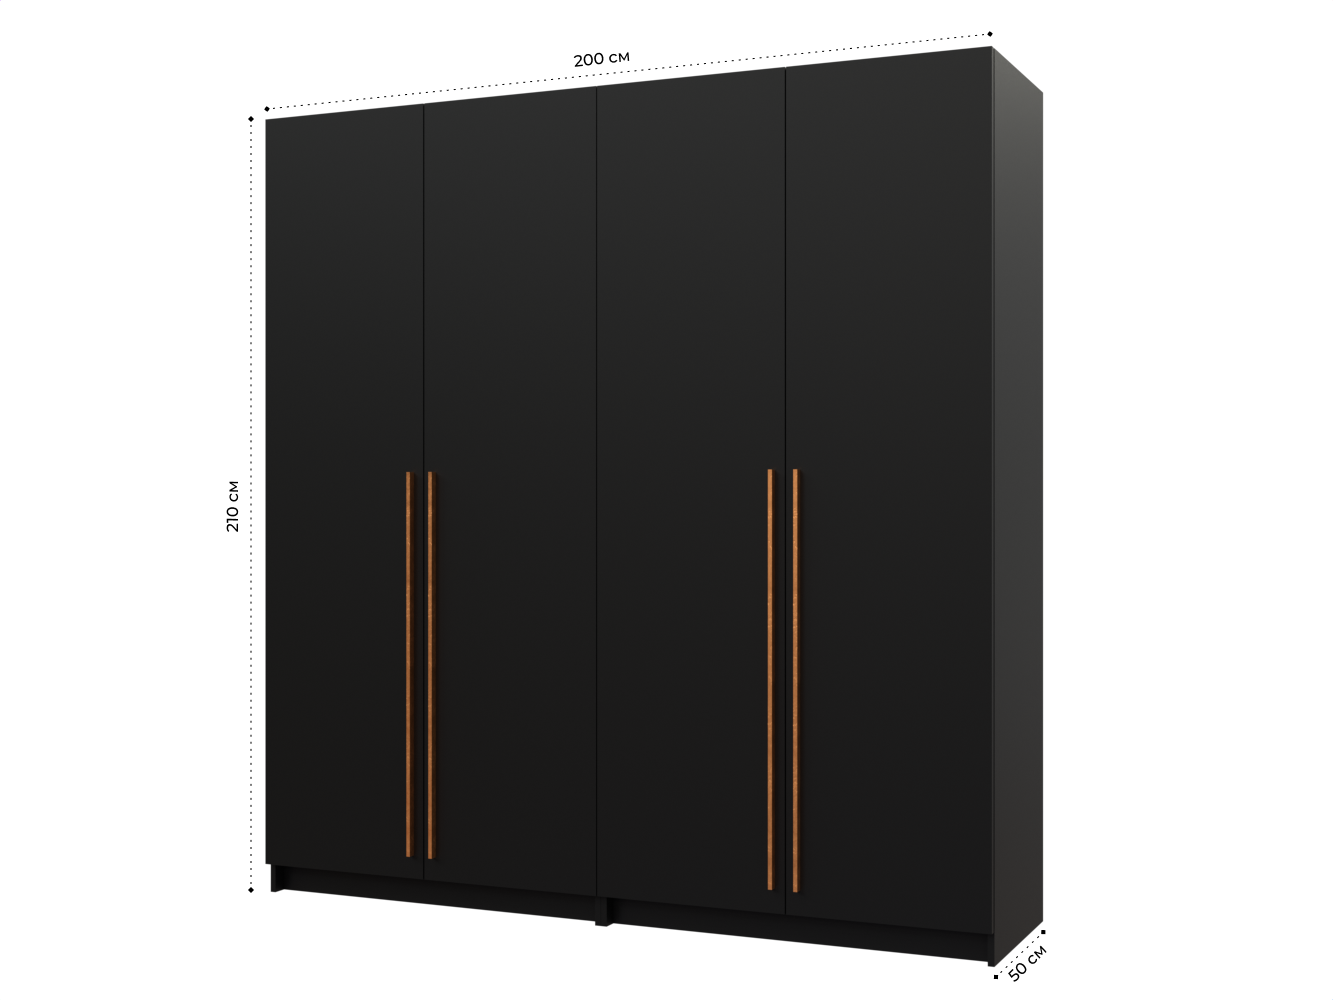 Распашной шкаф Пакс Фардал 68 black ИКЕА (IKEA) изображение товара